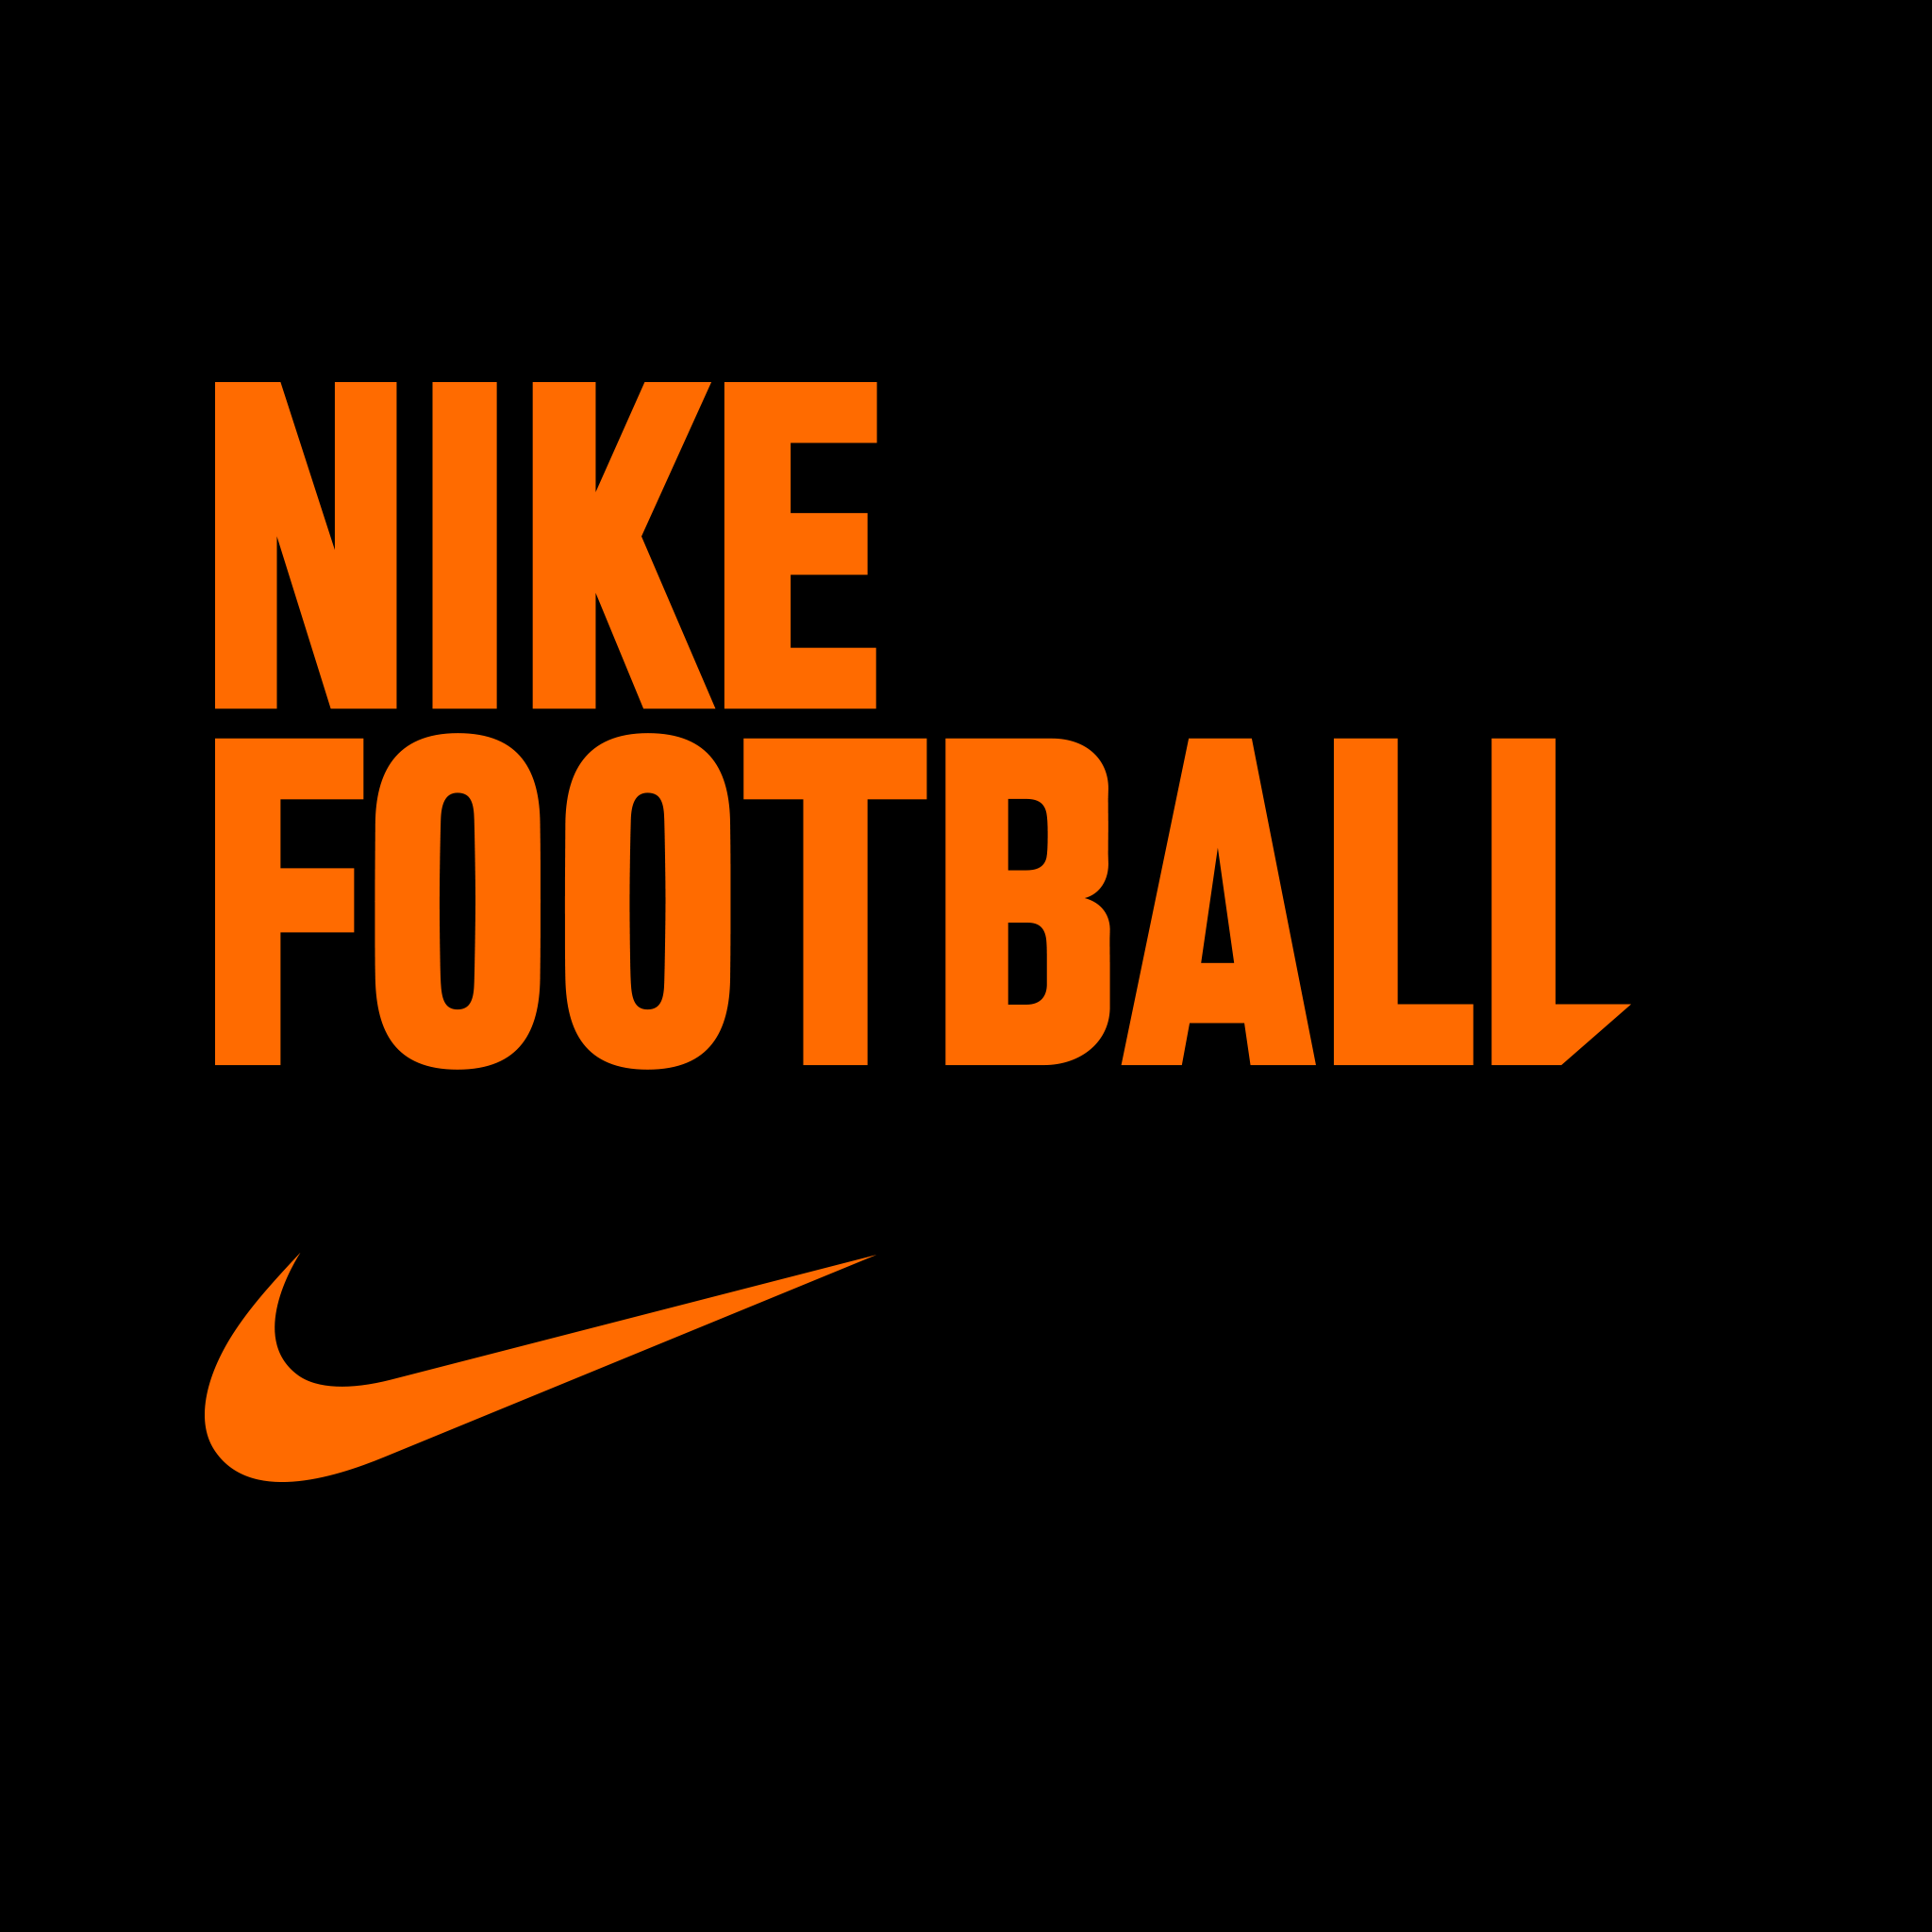 Nike Football Logo - Nike Football Logo. Blade Brand Edge